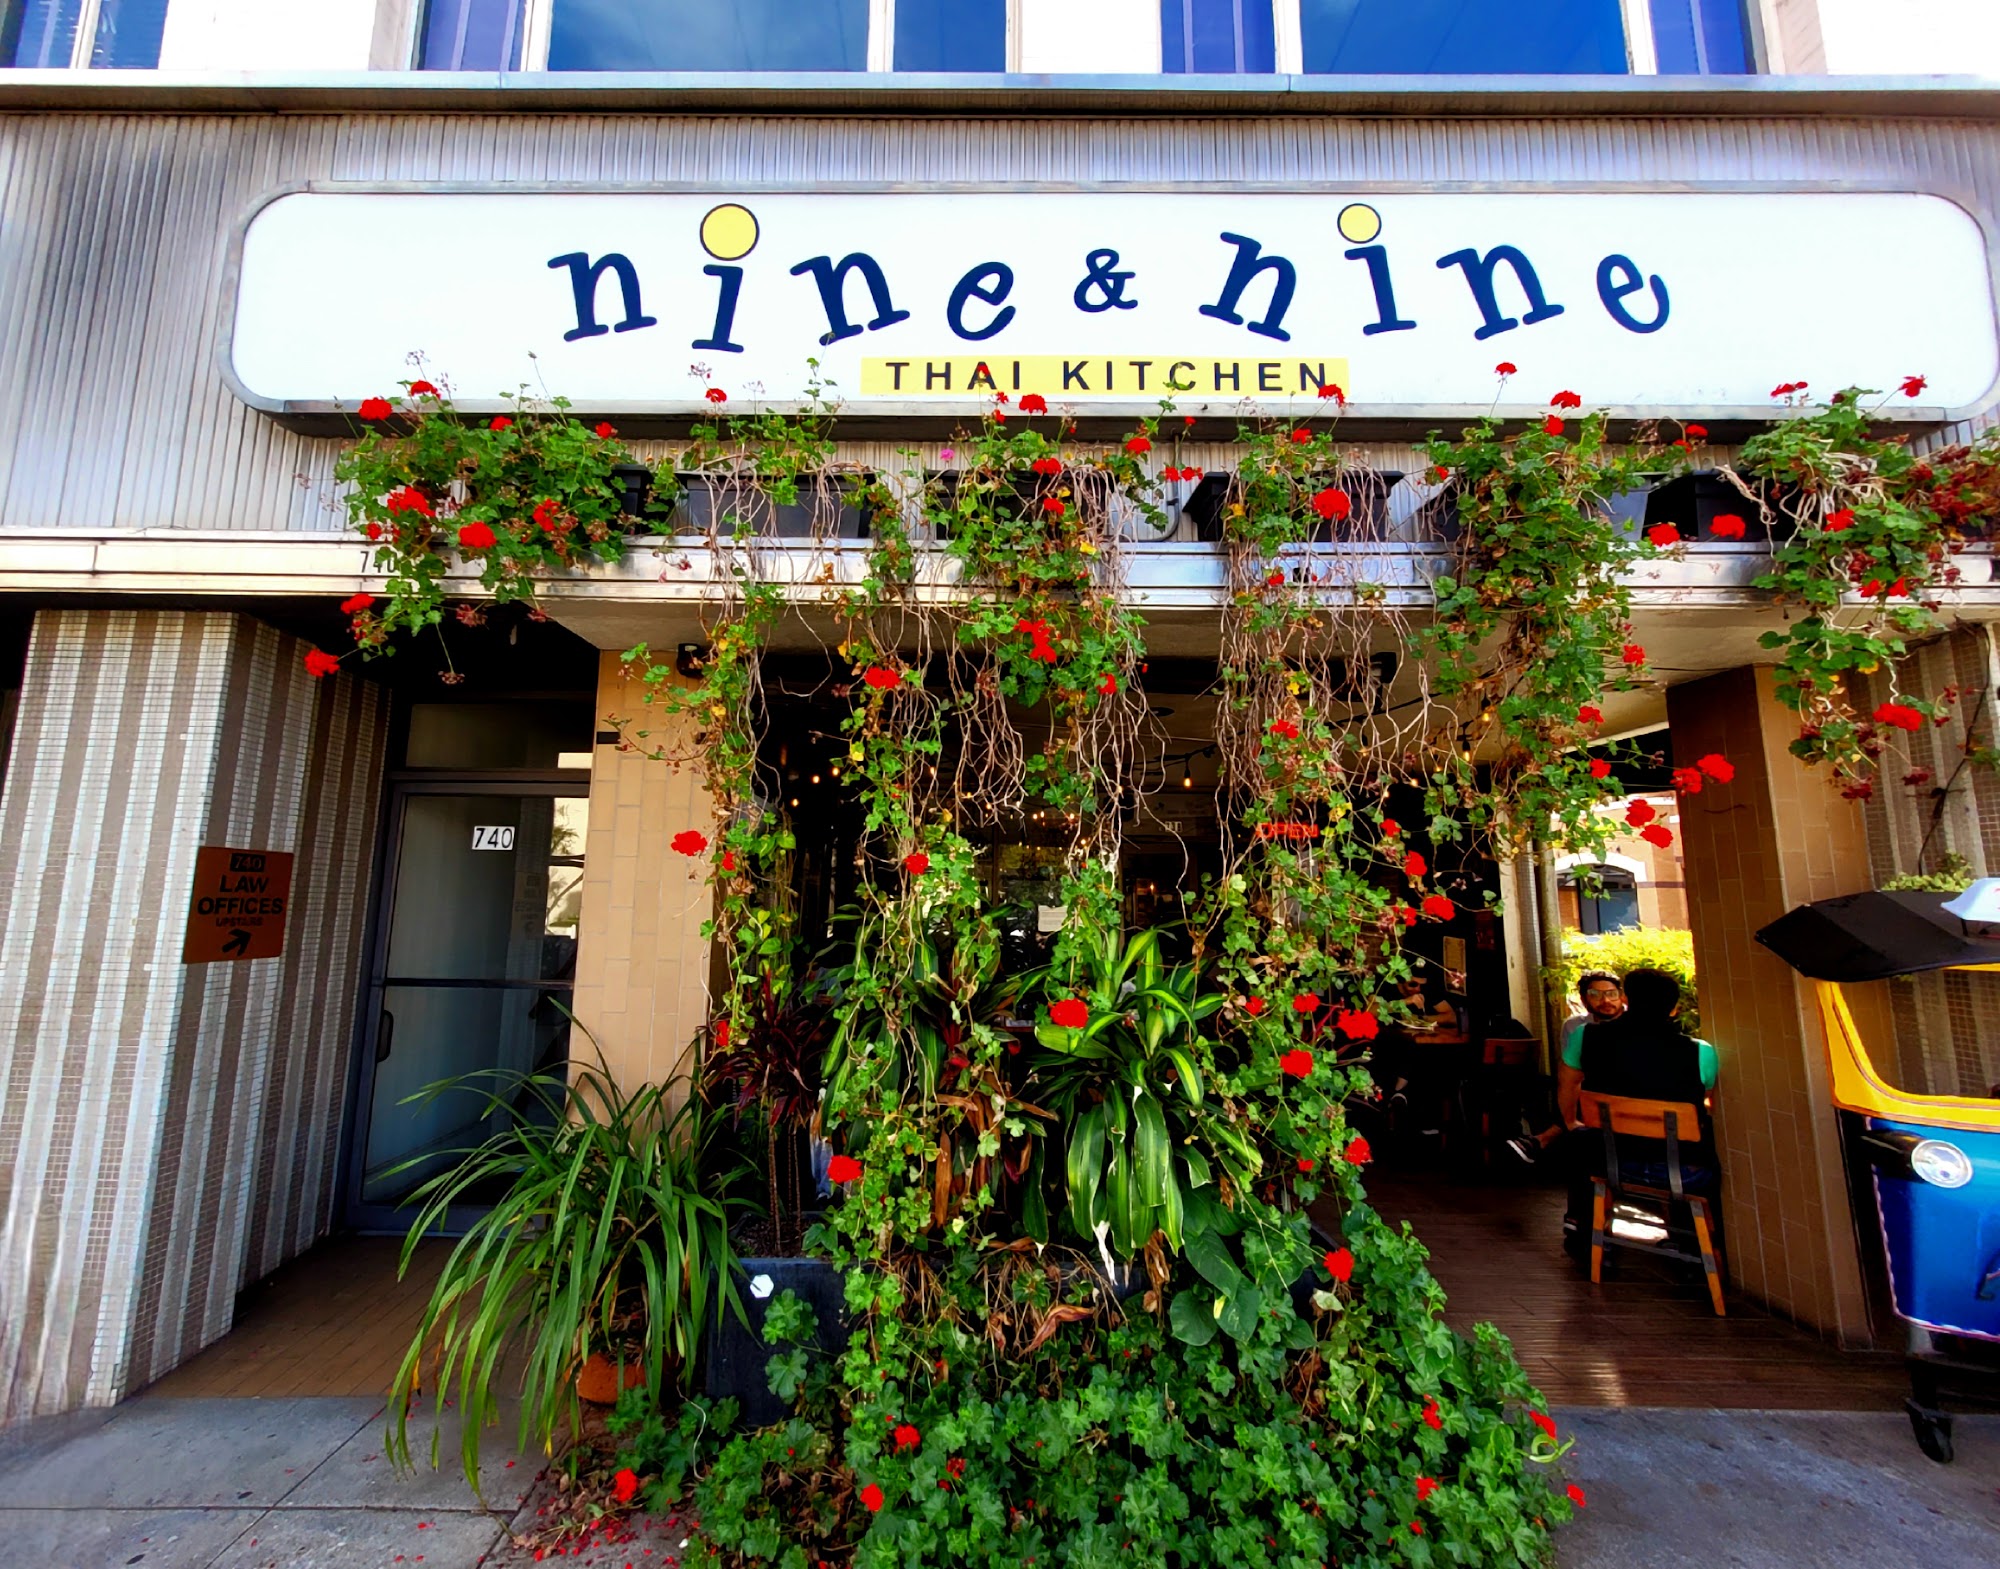 Nine & Nine Thai Kitchen